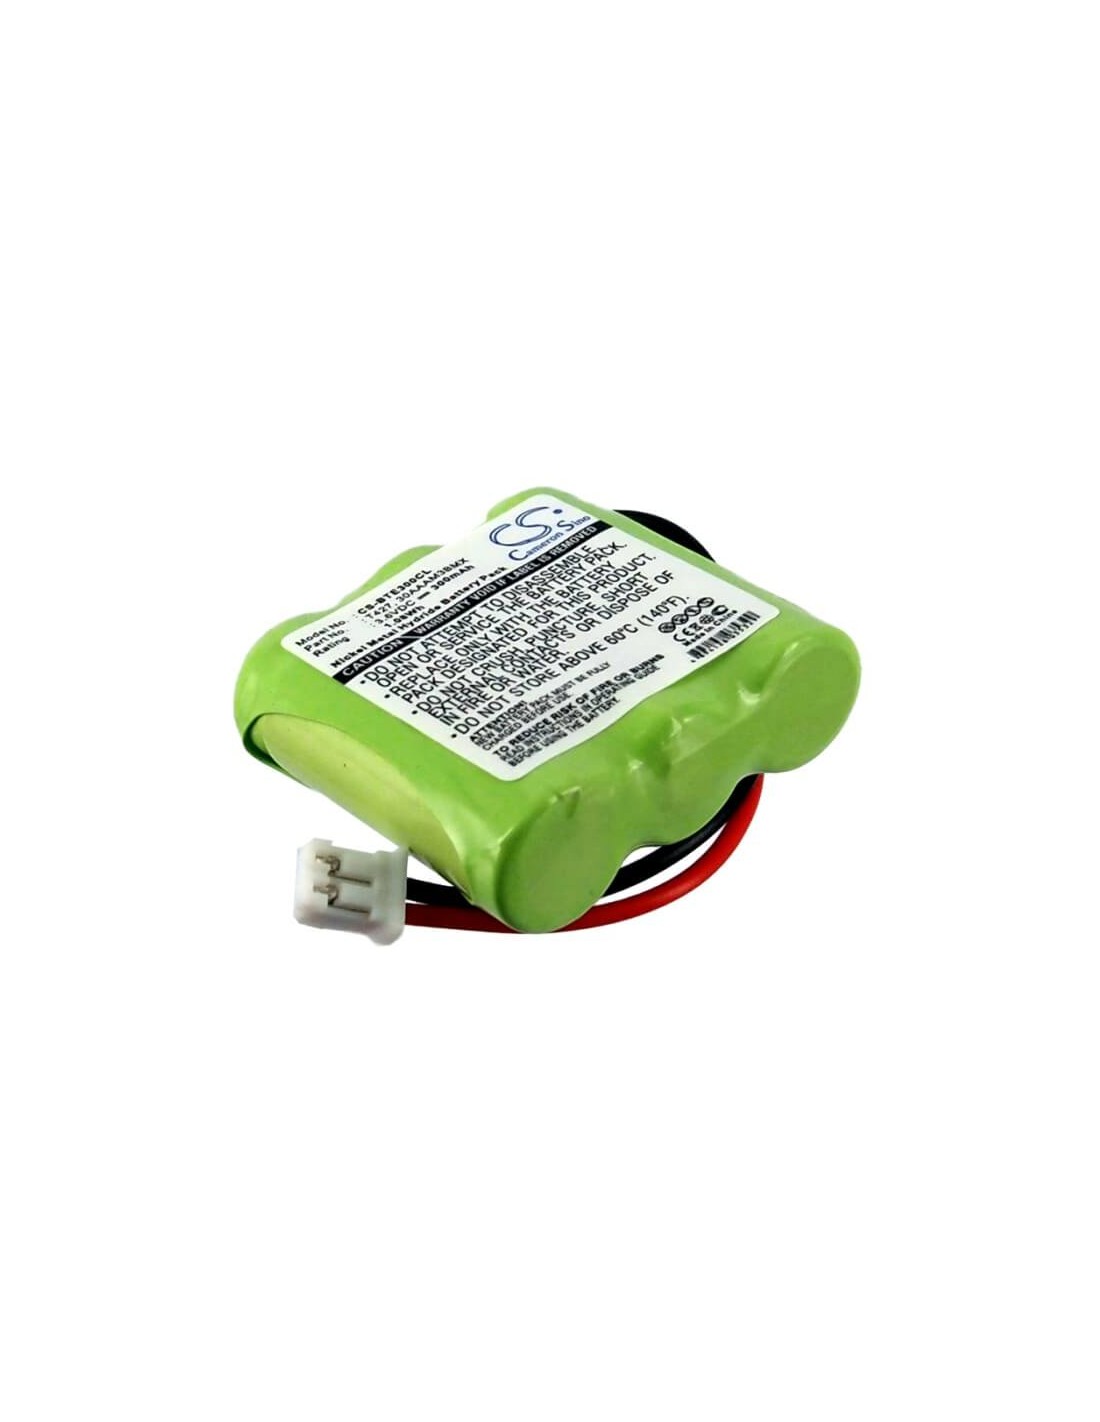 Battery for Master, Veraphone Micro 3.6V, 300mAh - 1.08Wh